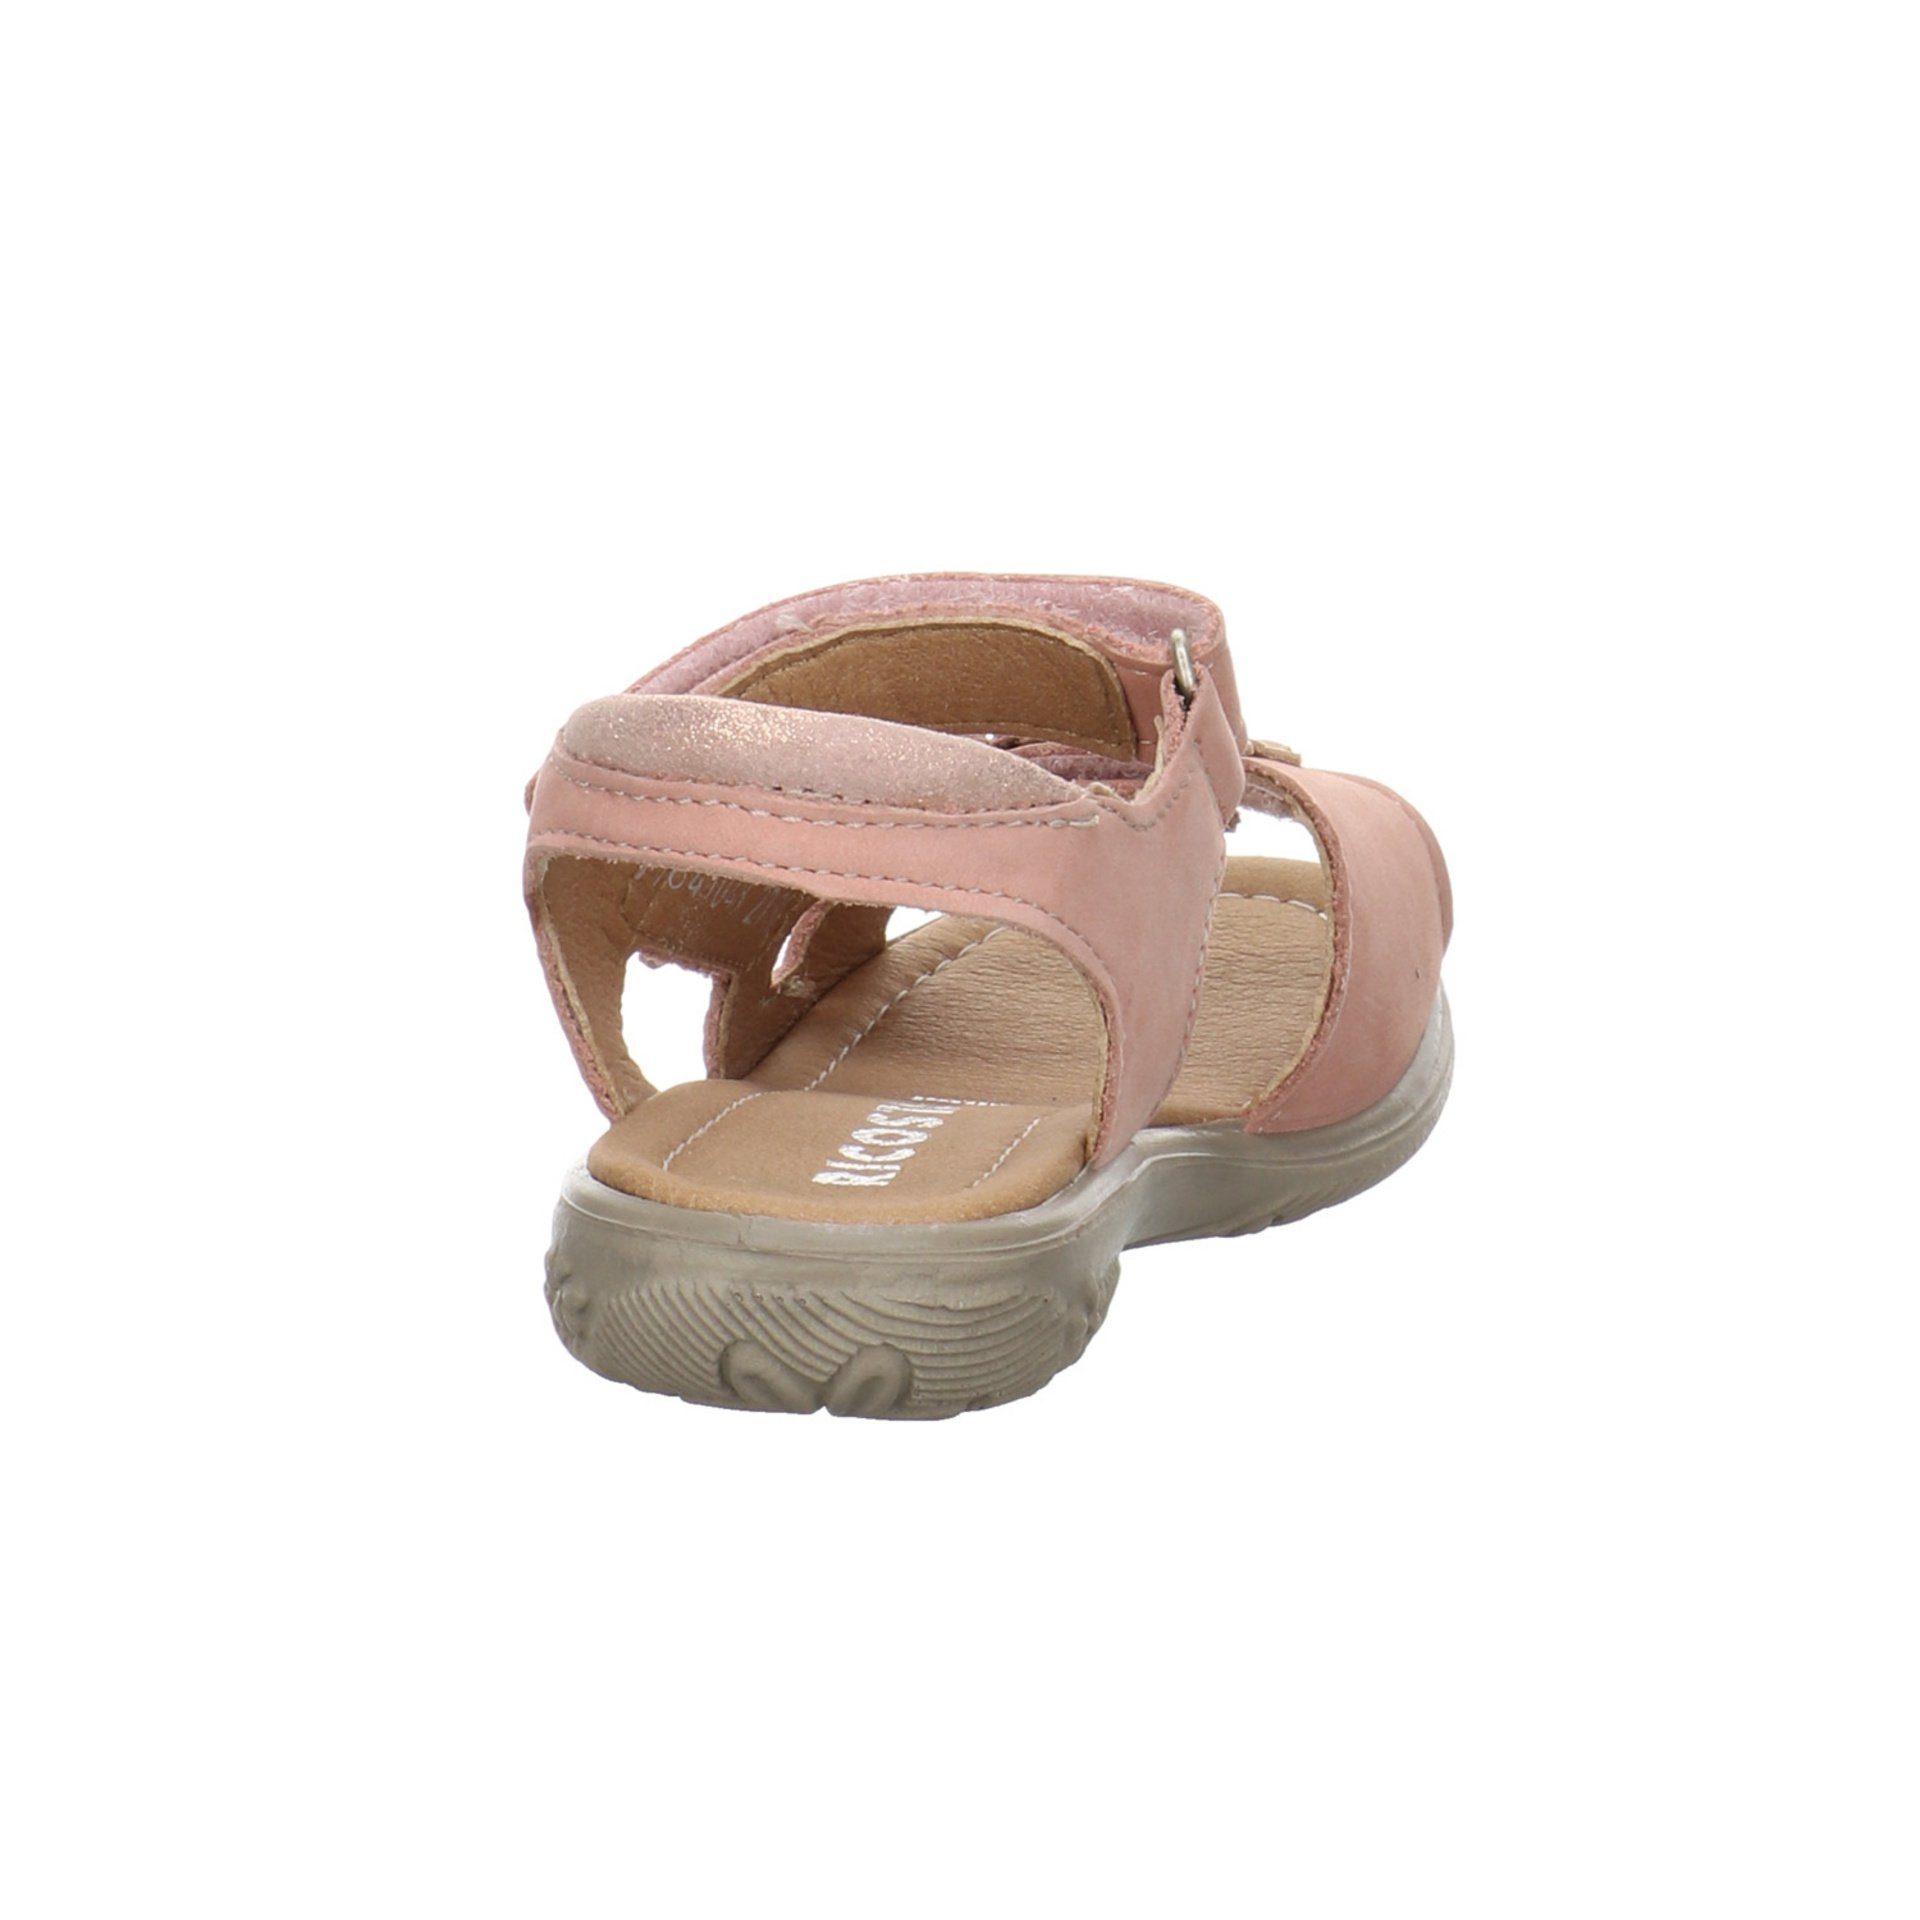 Ricosta Mädchen Sandalen Schuhe rosa Glattleder Kinderschuhe Cilla Sandale Sandale